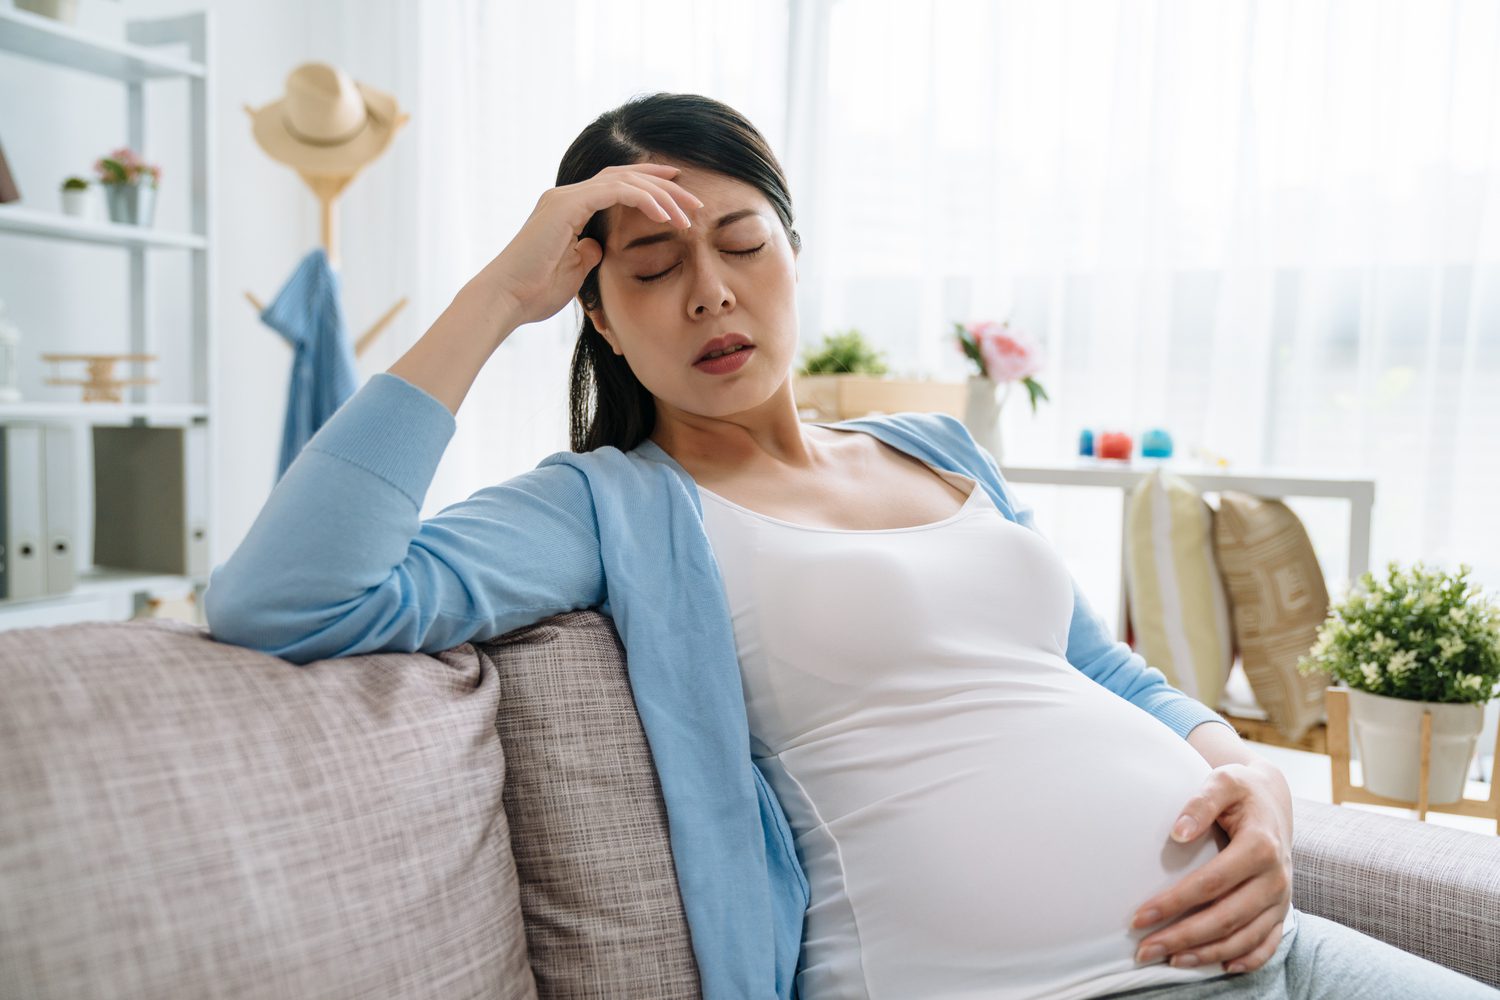 Symptoms of Hypertension During Pregnancy